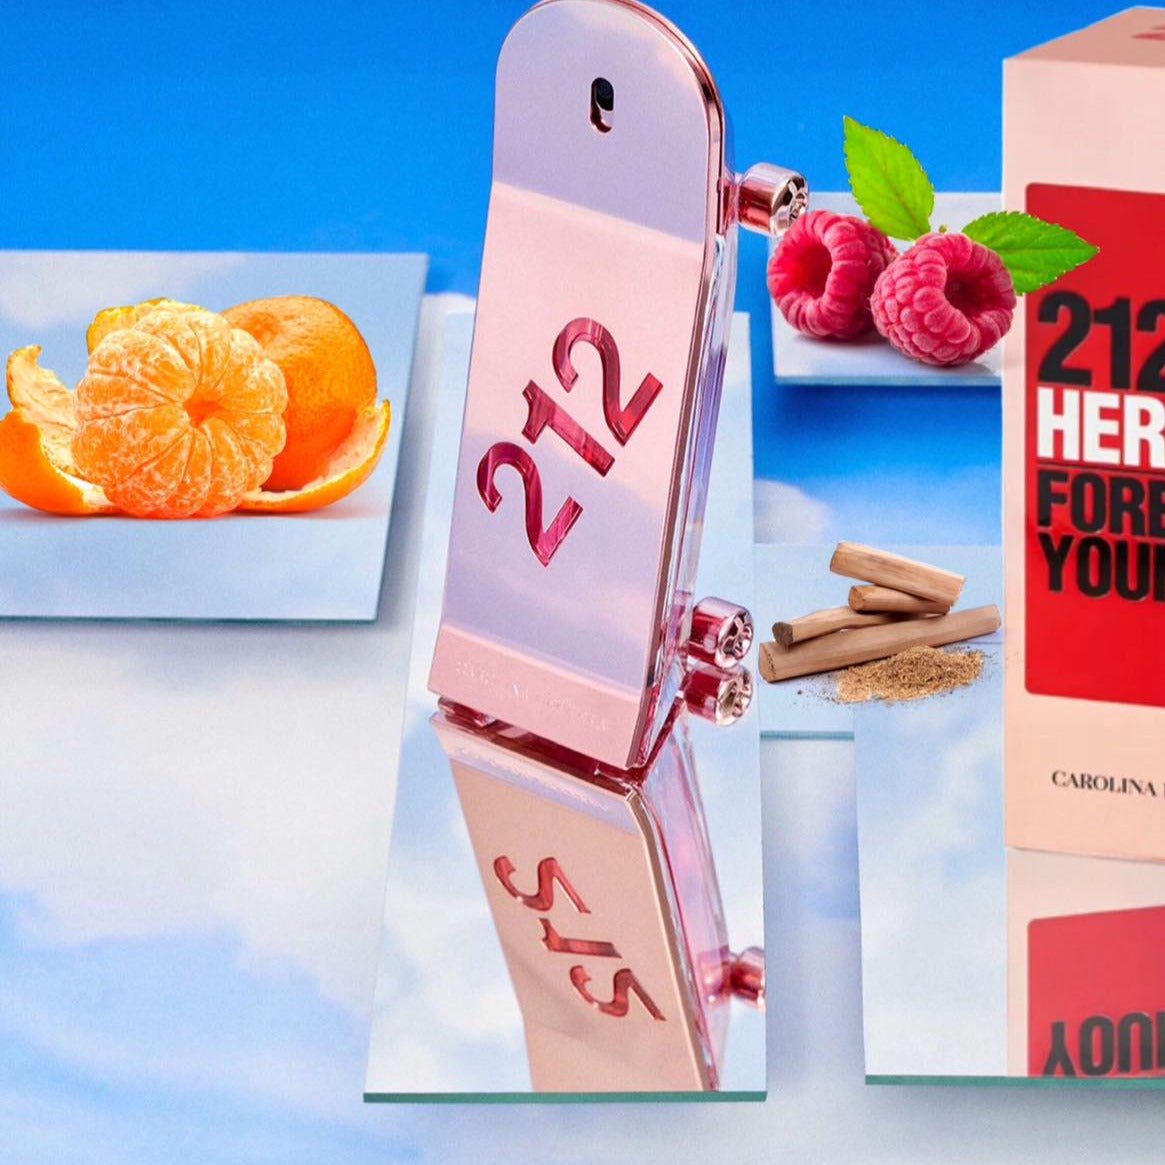 Carolina Herrera 212 Heroes Forever Young EDP | My Perfume Shop Australia